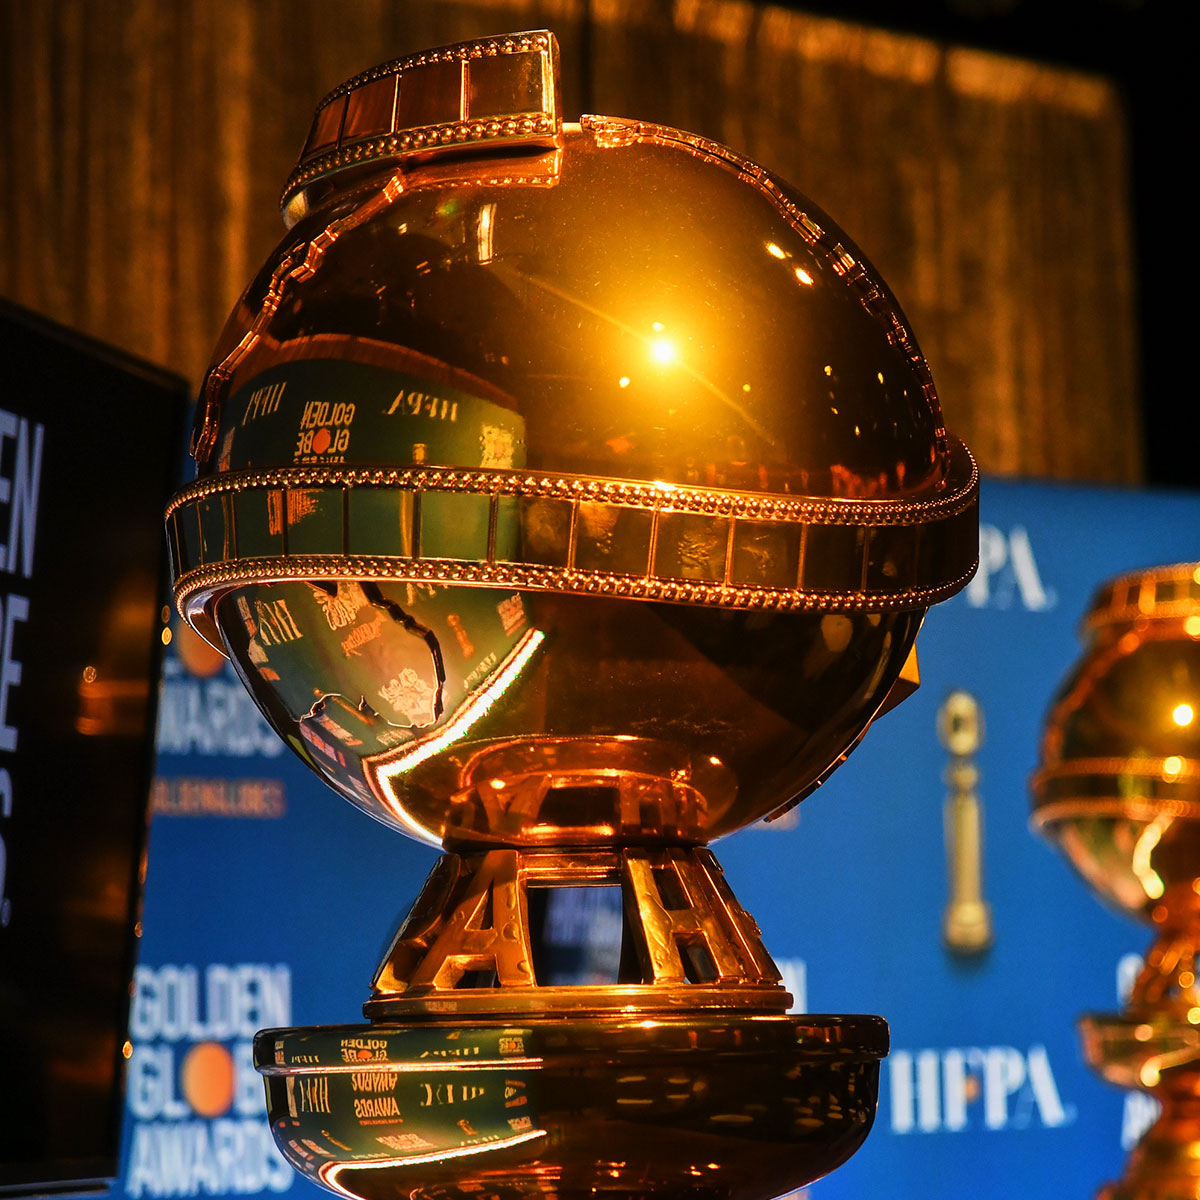 Congratulations to Director James Cameron - Golden Globe Nominee